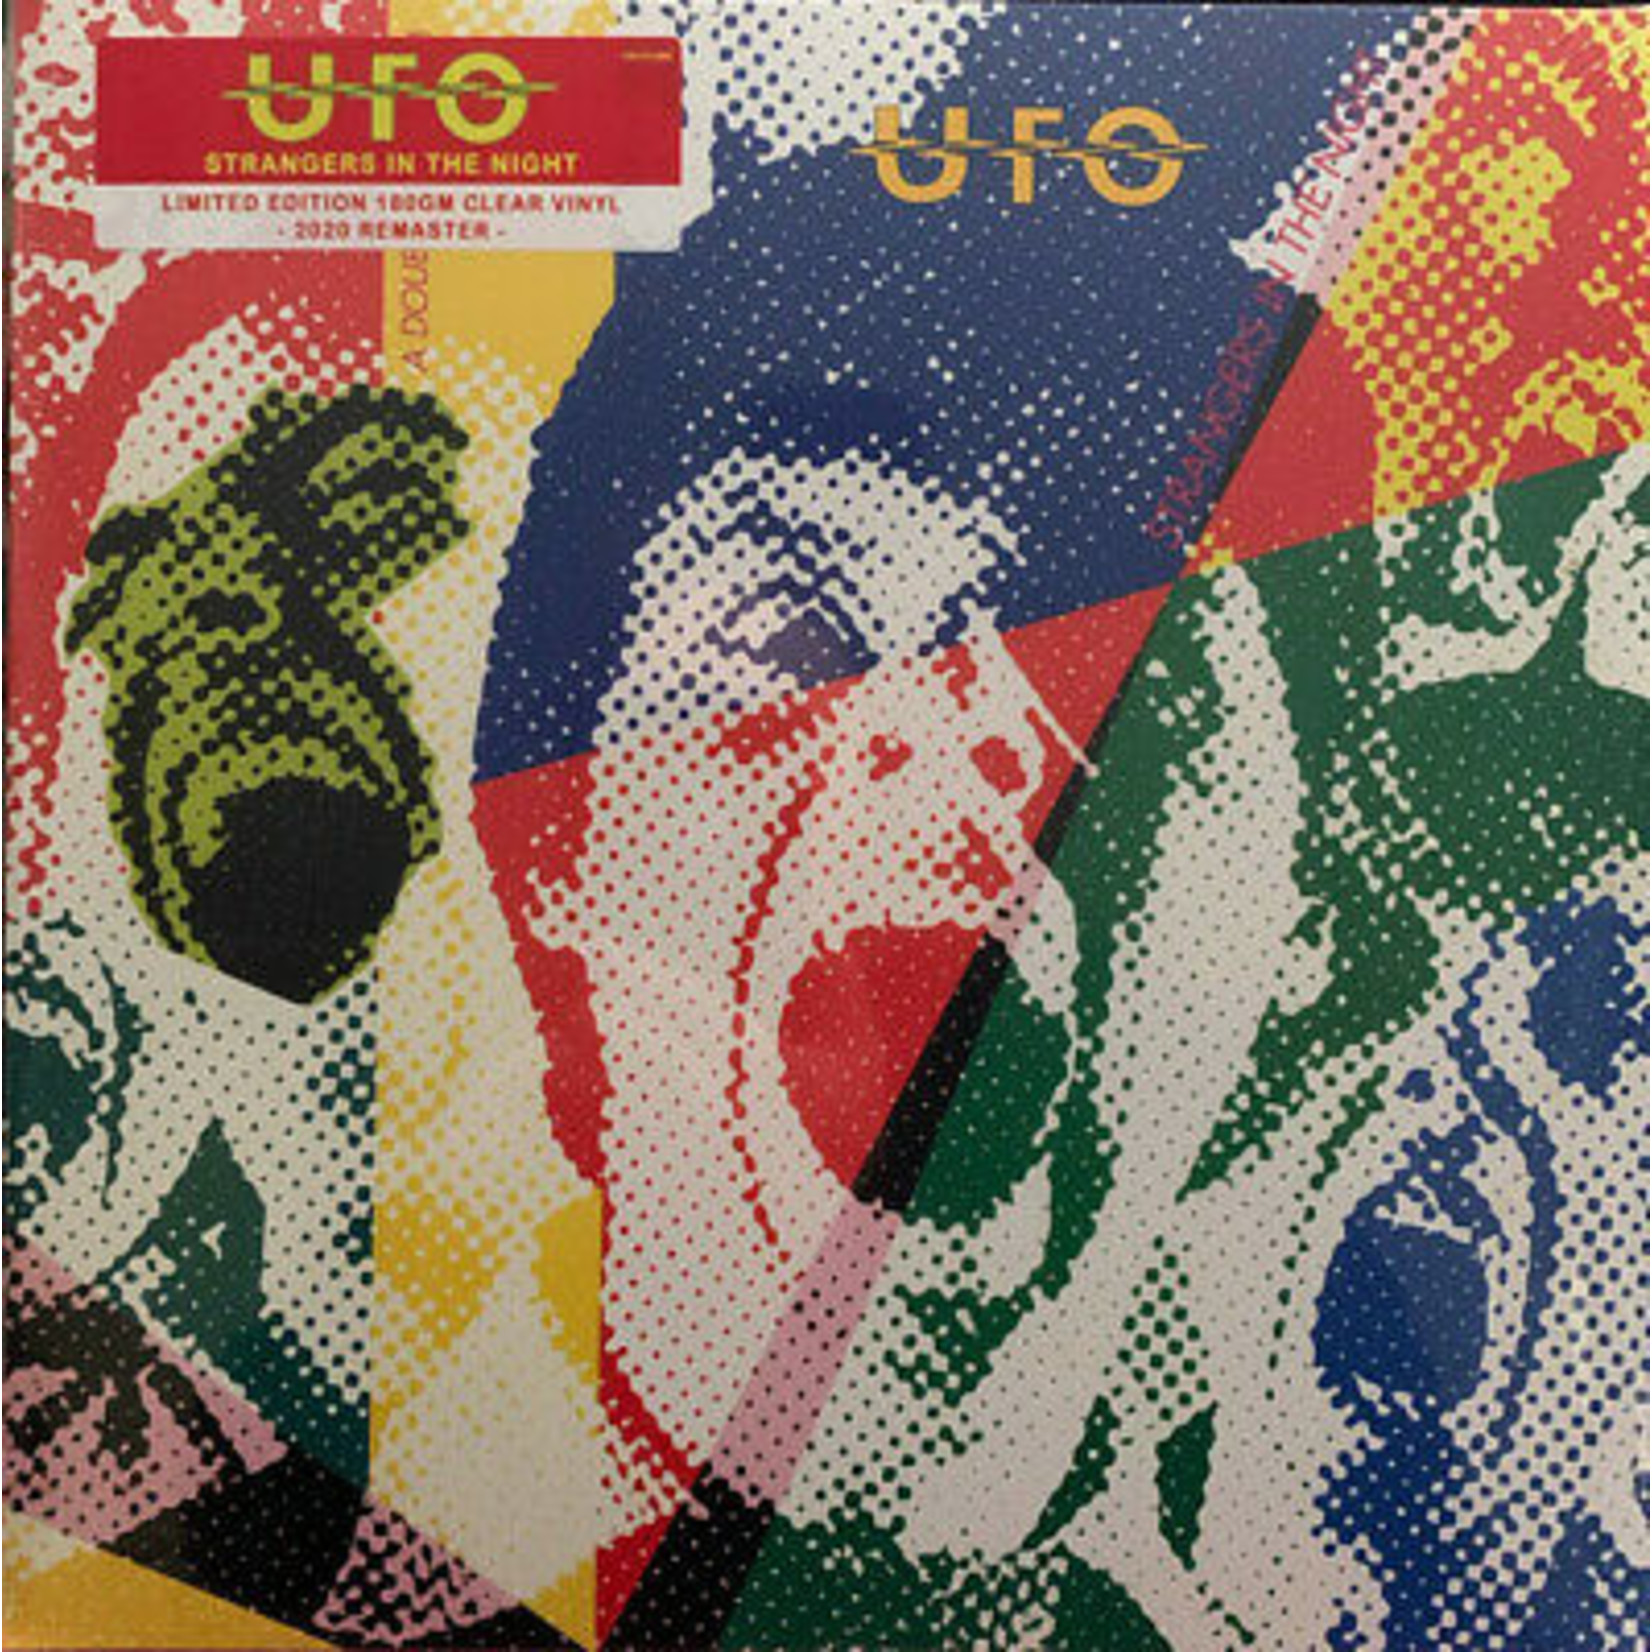 UFO - strangers  2 x LP (colored)